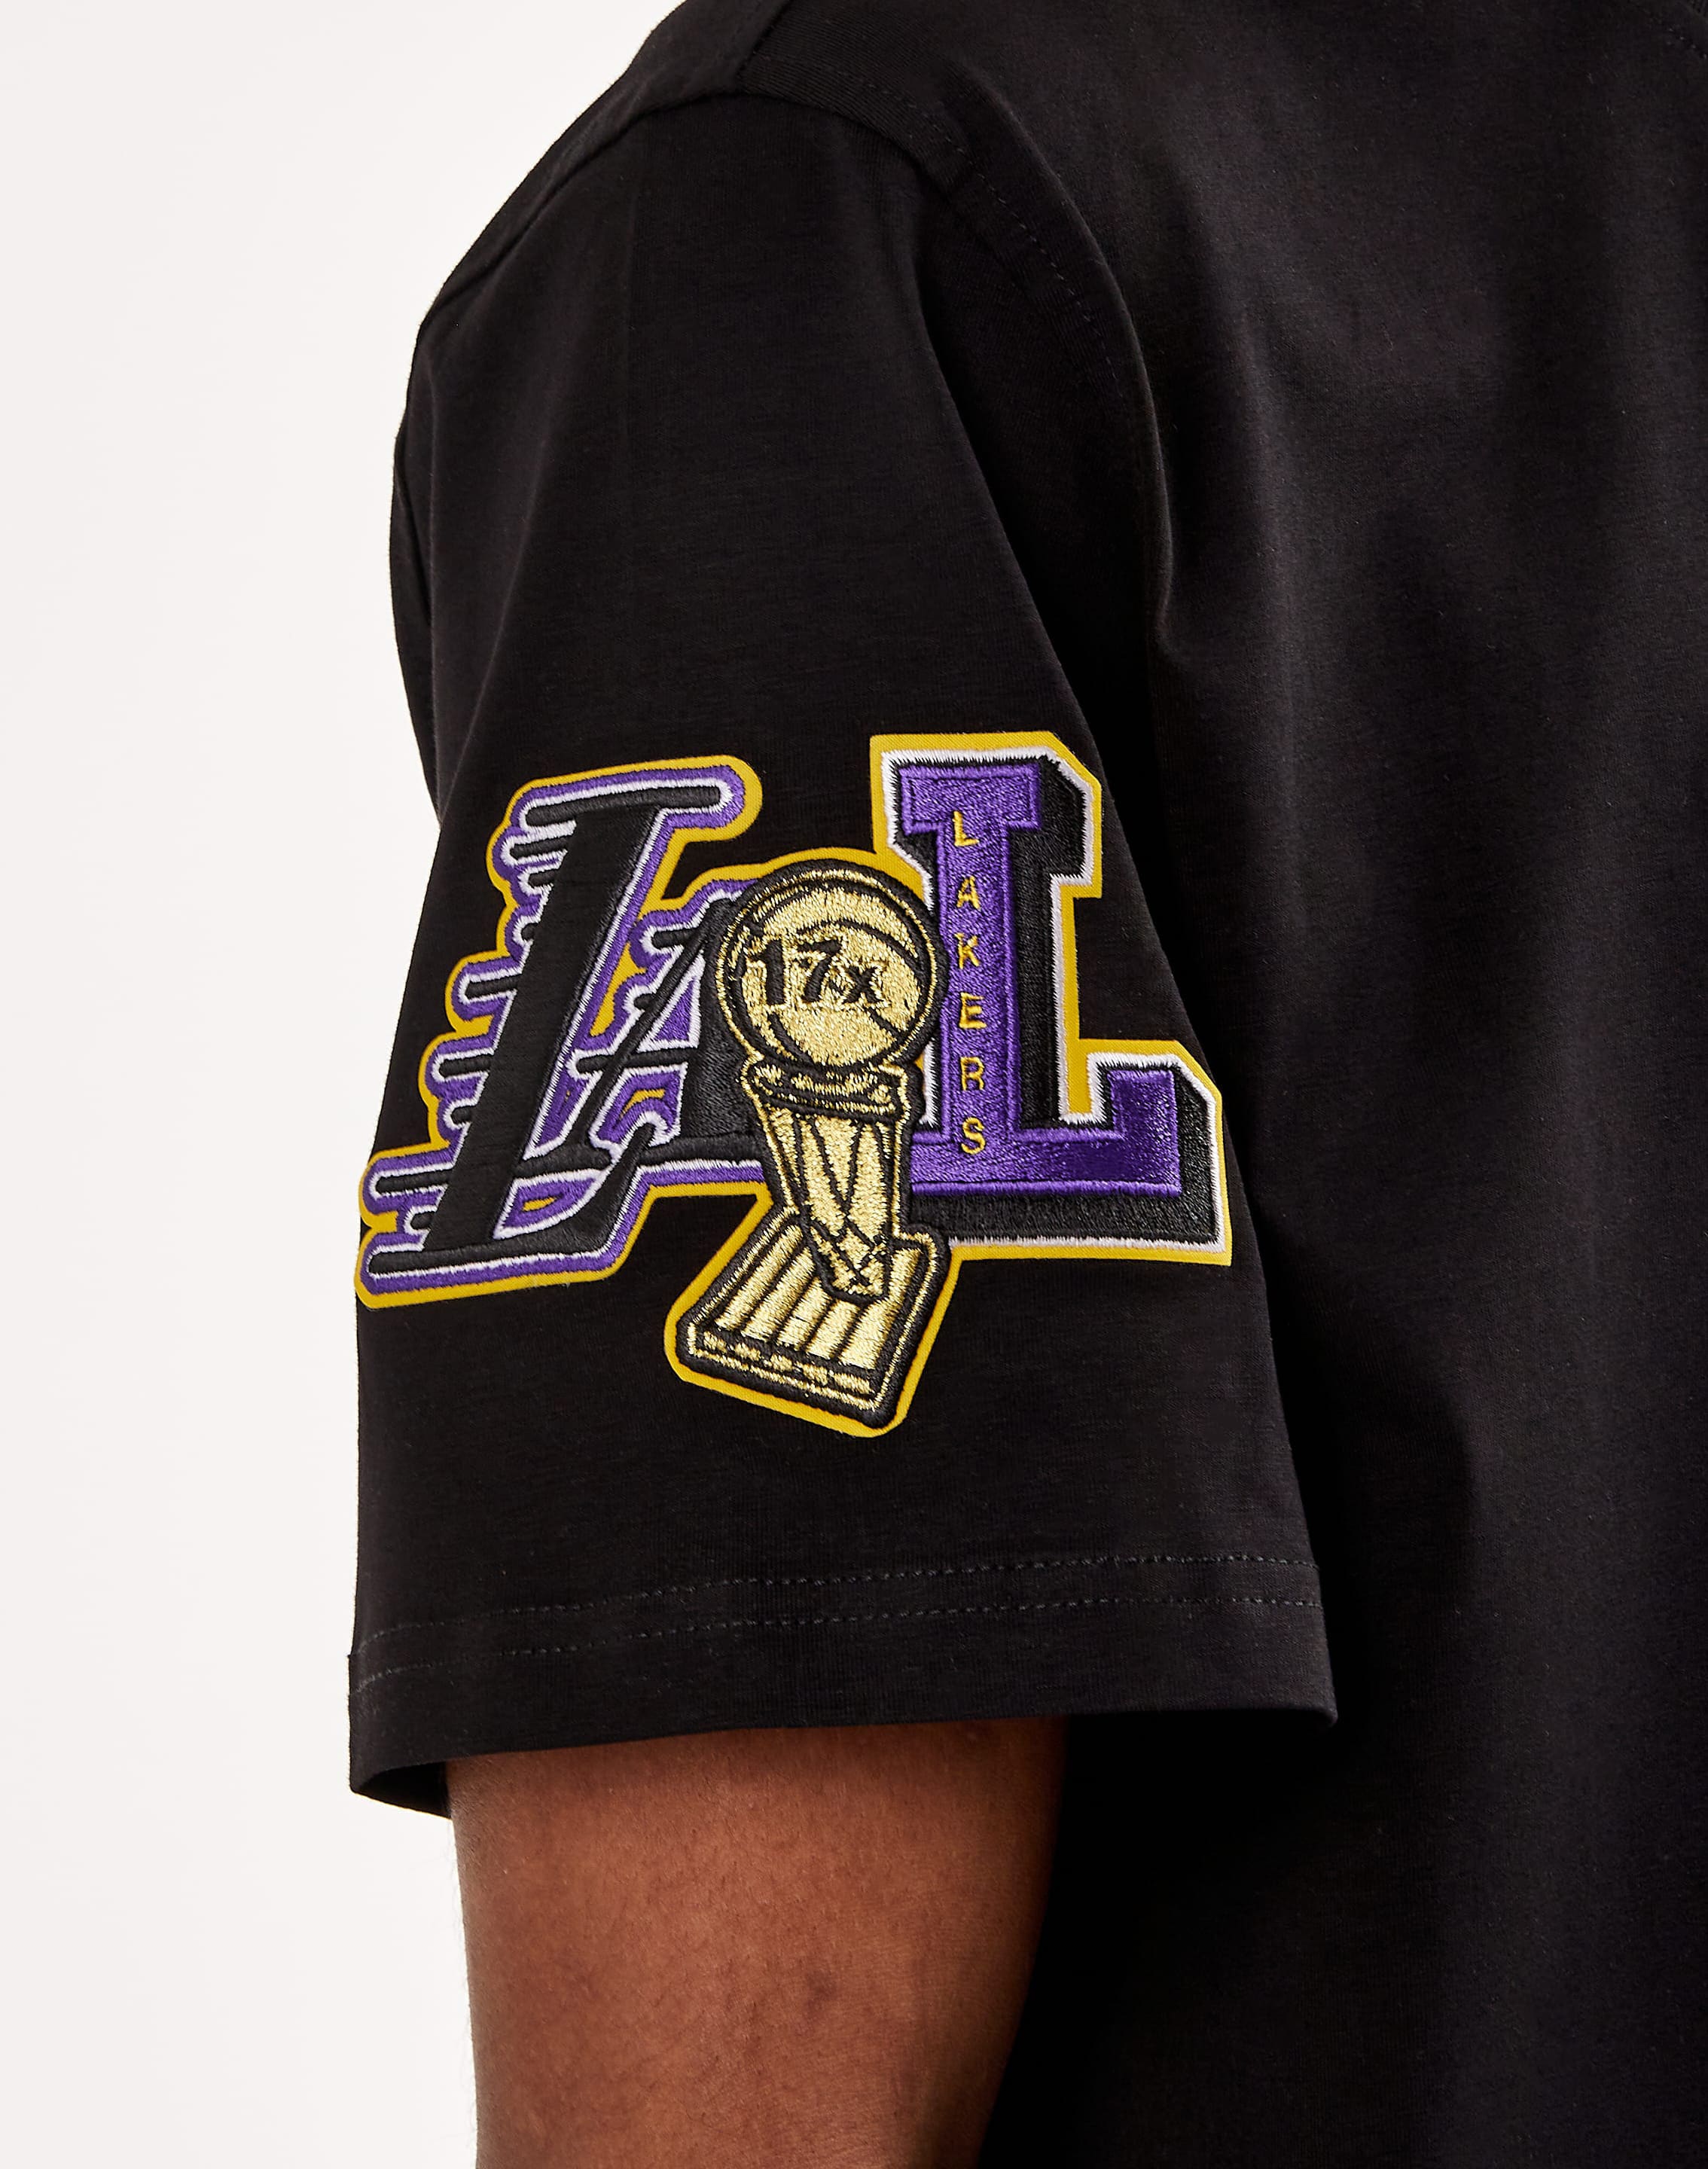 Pro Standard Black Los Angeles Lakers Cityscape Crop Boxy T-shirt